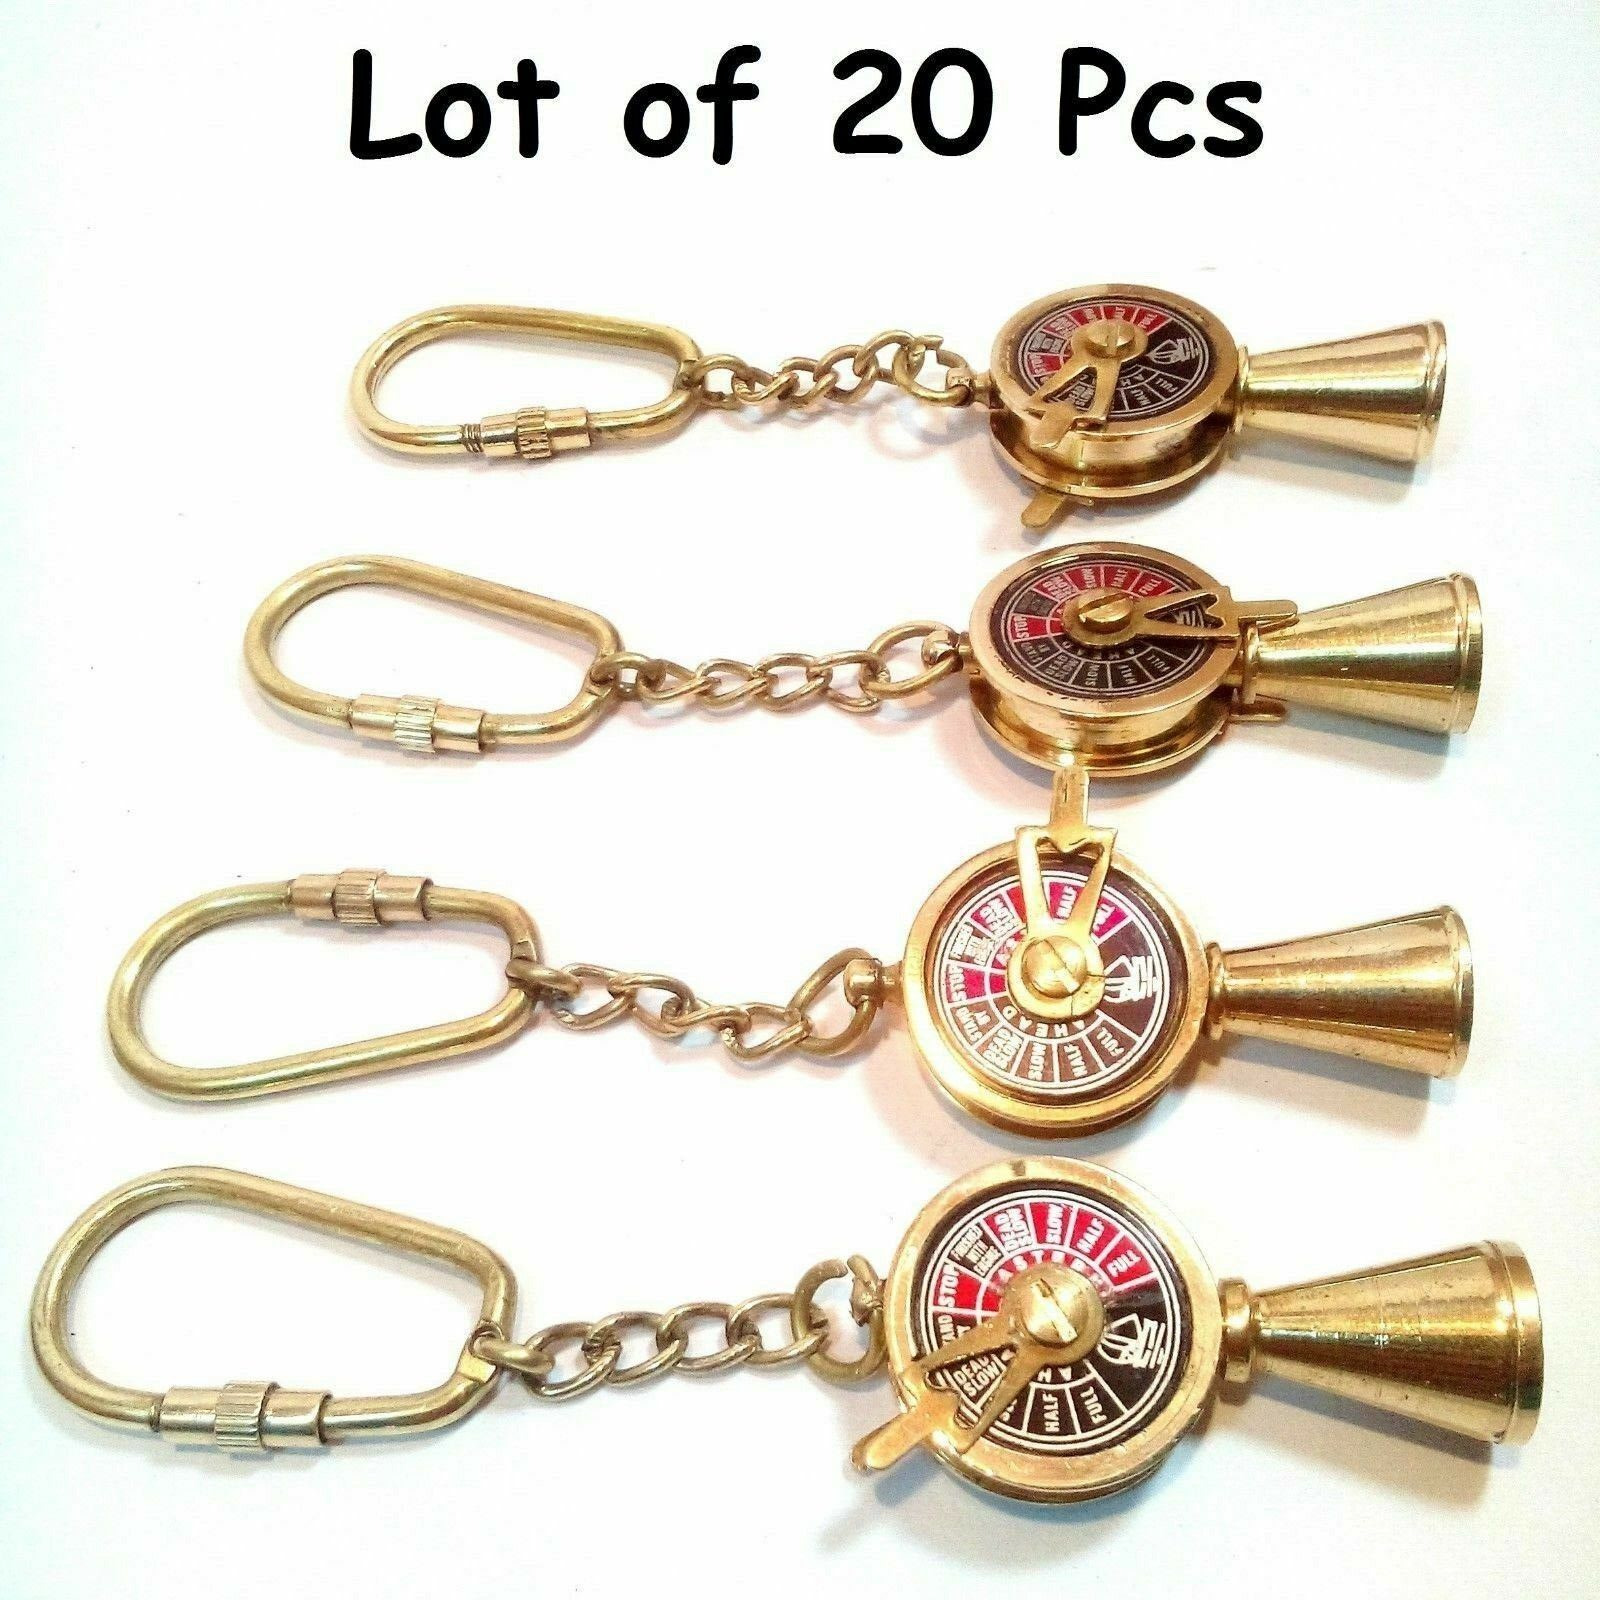 Lot of 20 Unit Handmade Vintage Marina Key Chain Telegraph polish gift Nautical